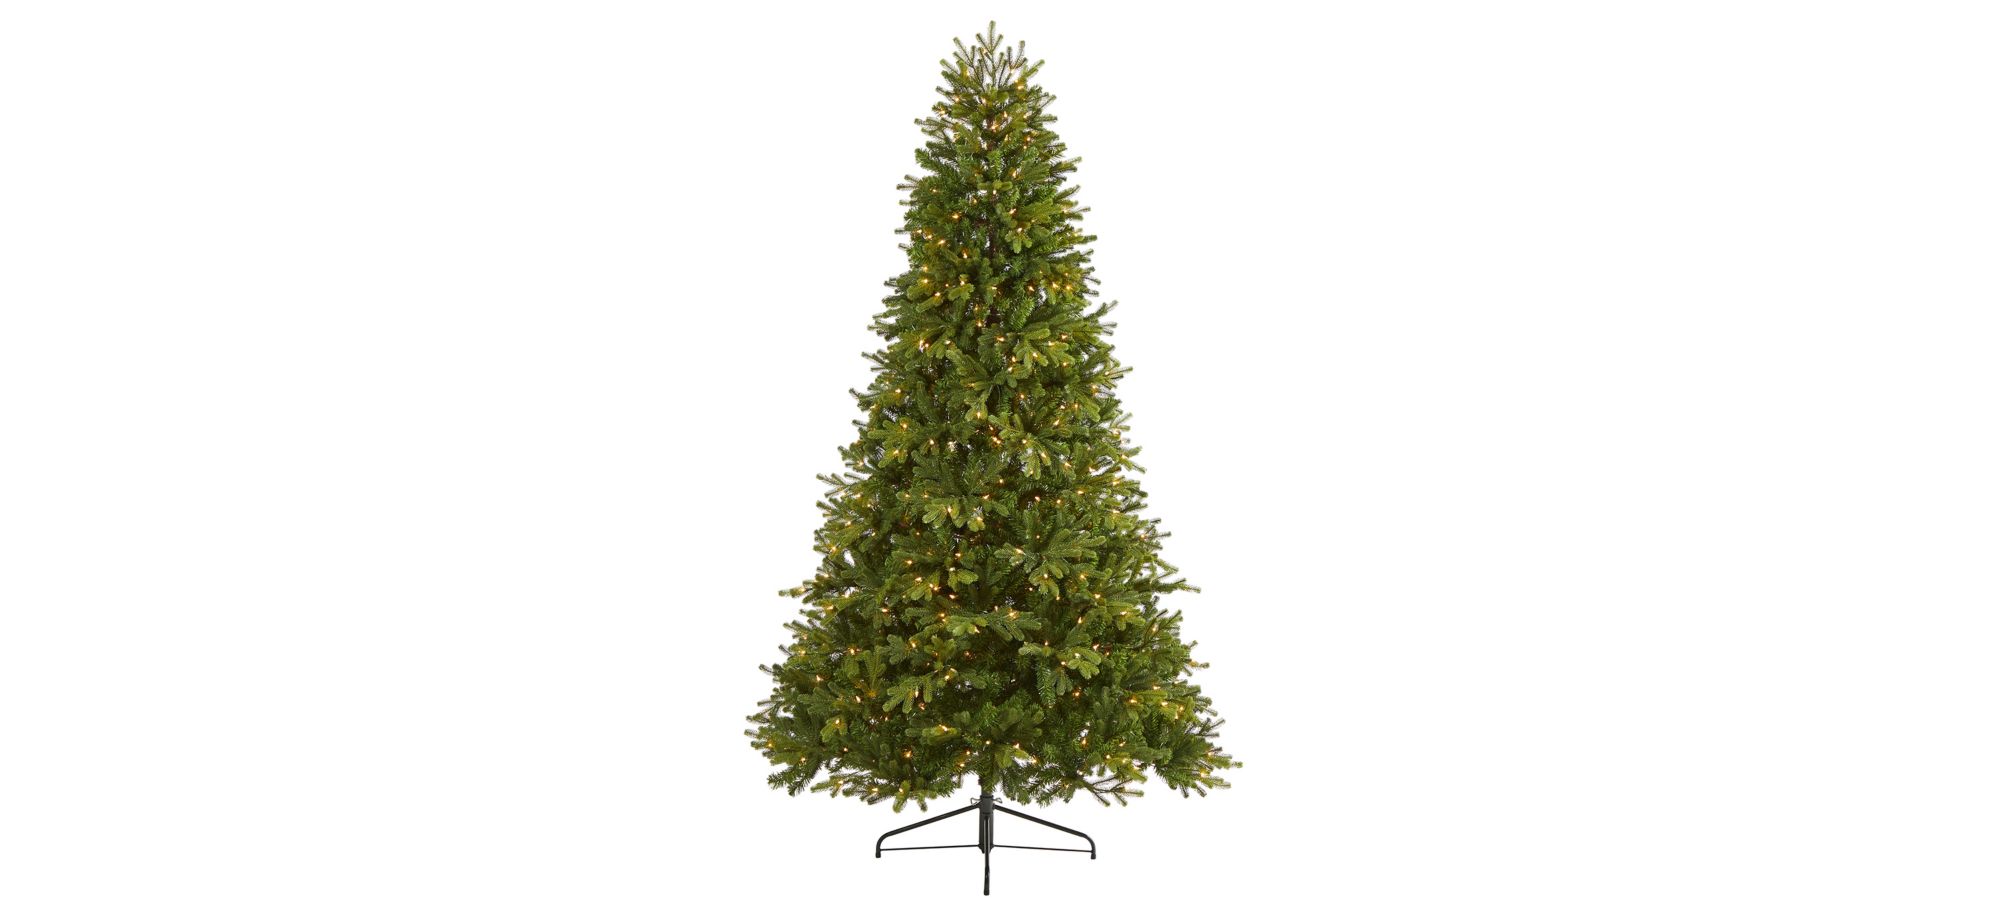 7.5ft. Pre-Lit Washington Fir Artificial Christmas Tree in Green by Bellanest